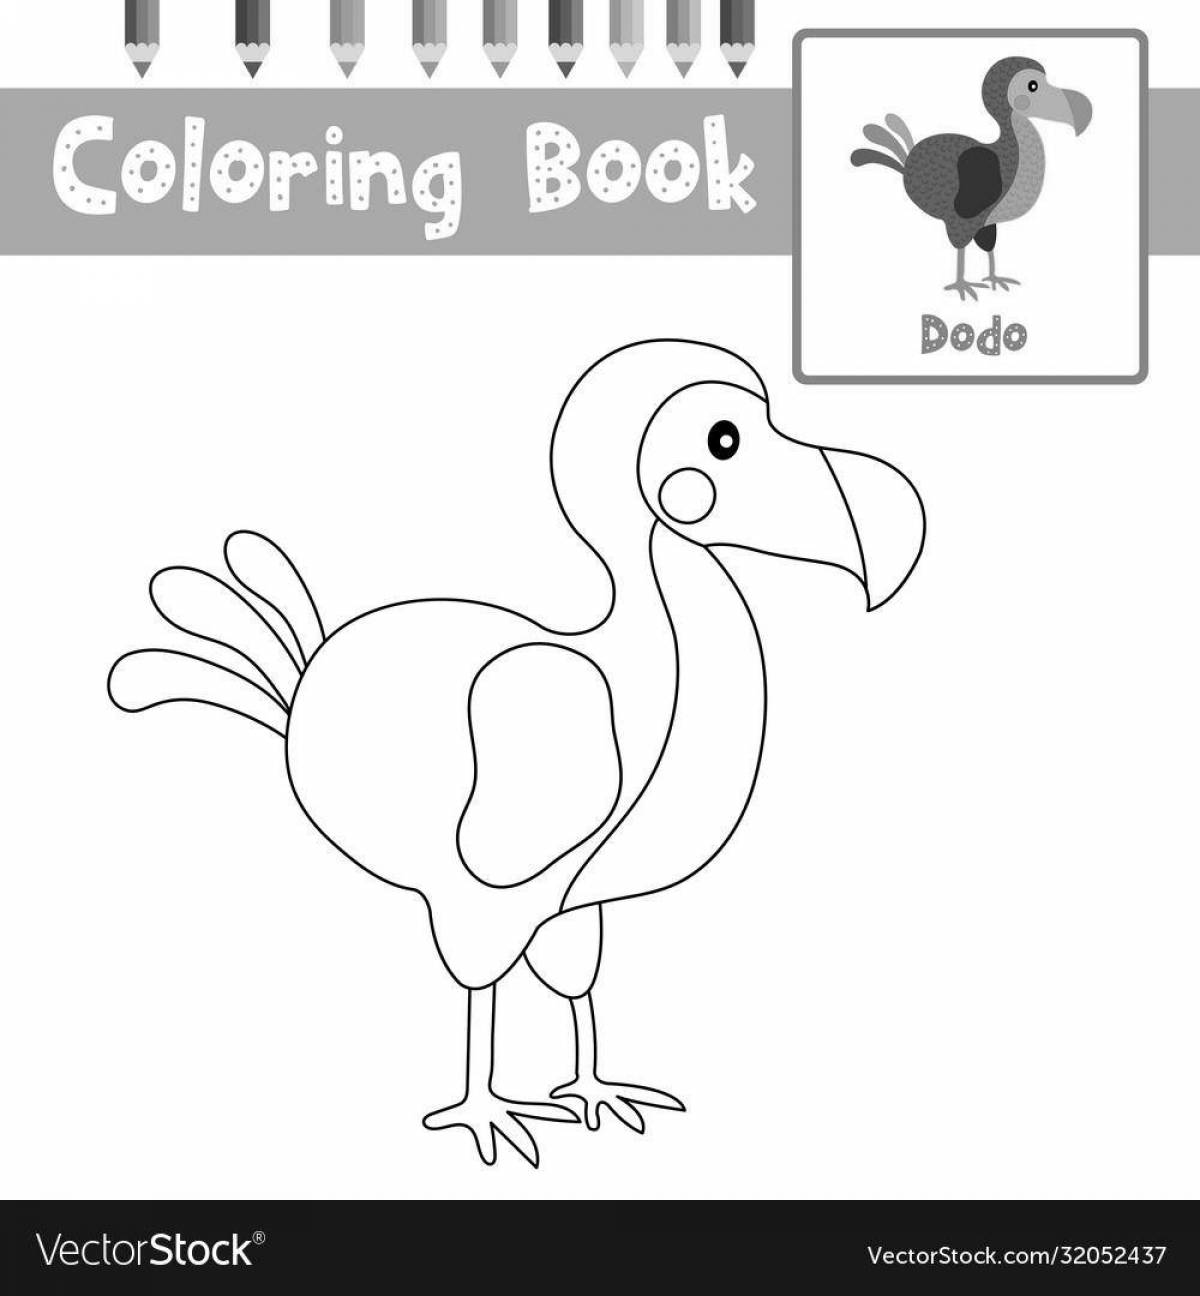 Joyful pizzeria dodo coloring